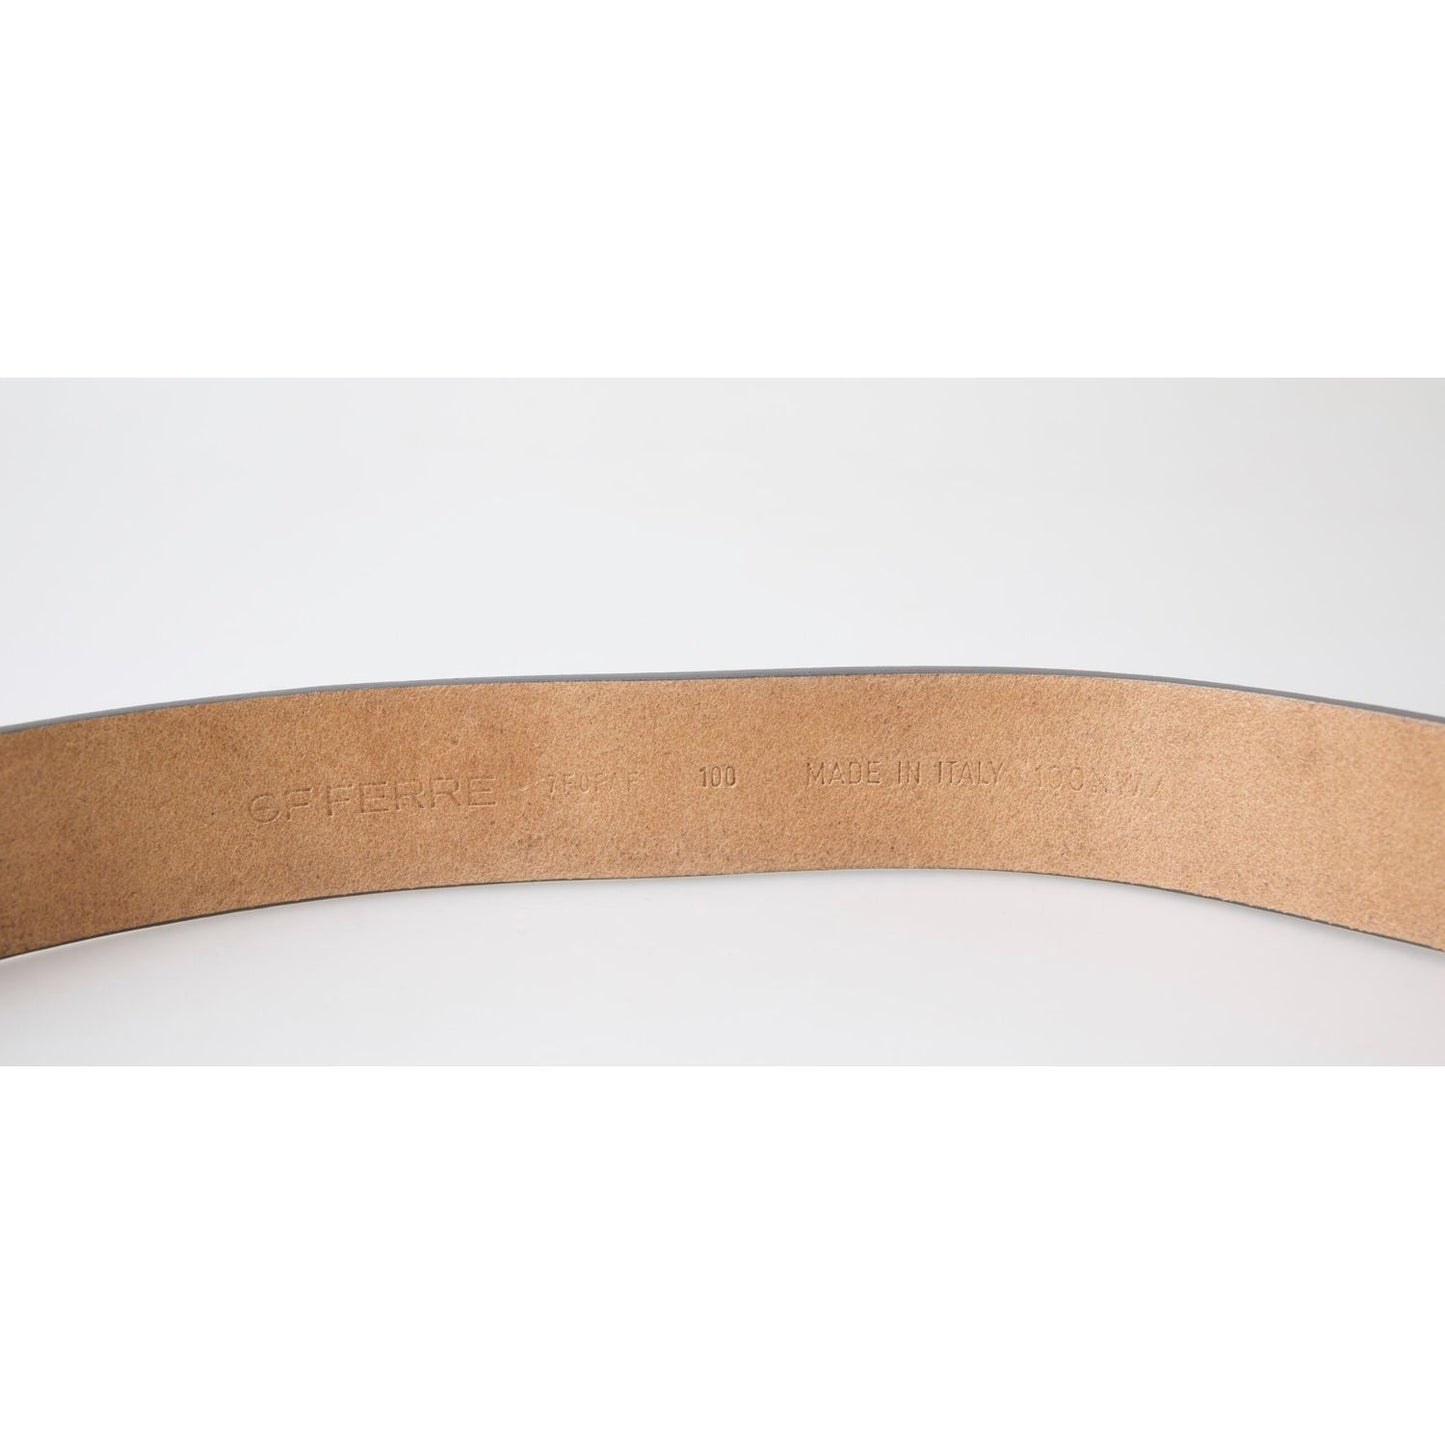 GF Ferre Elegant Leather Fashion Belt with Engraved Buckle brown-leather-fashion-logo-buckle-waist-belt